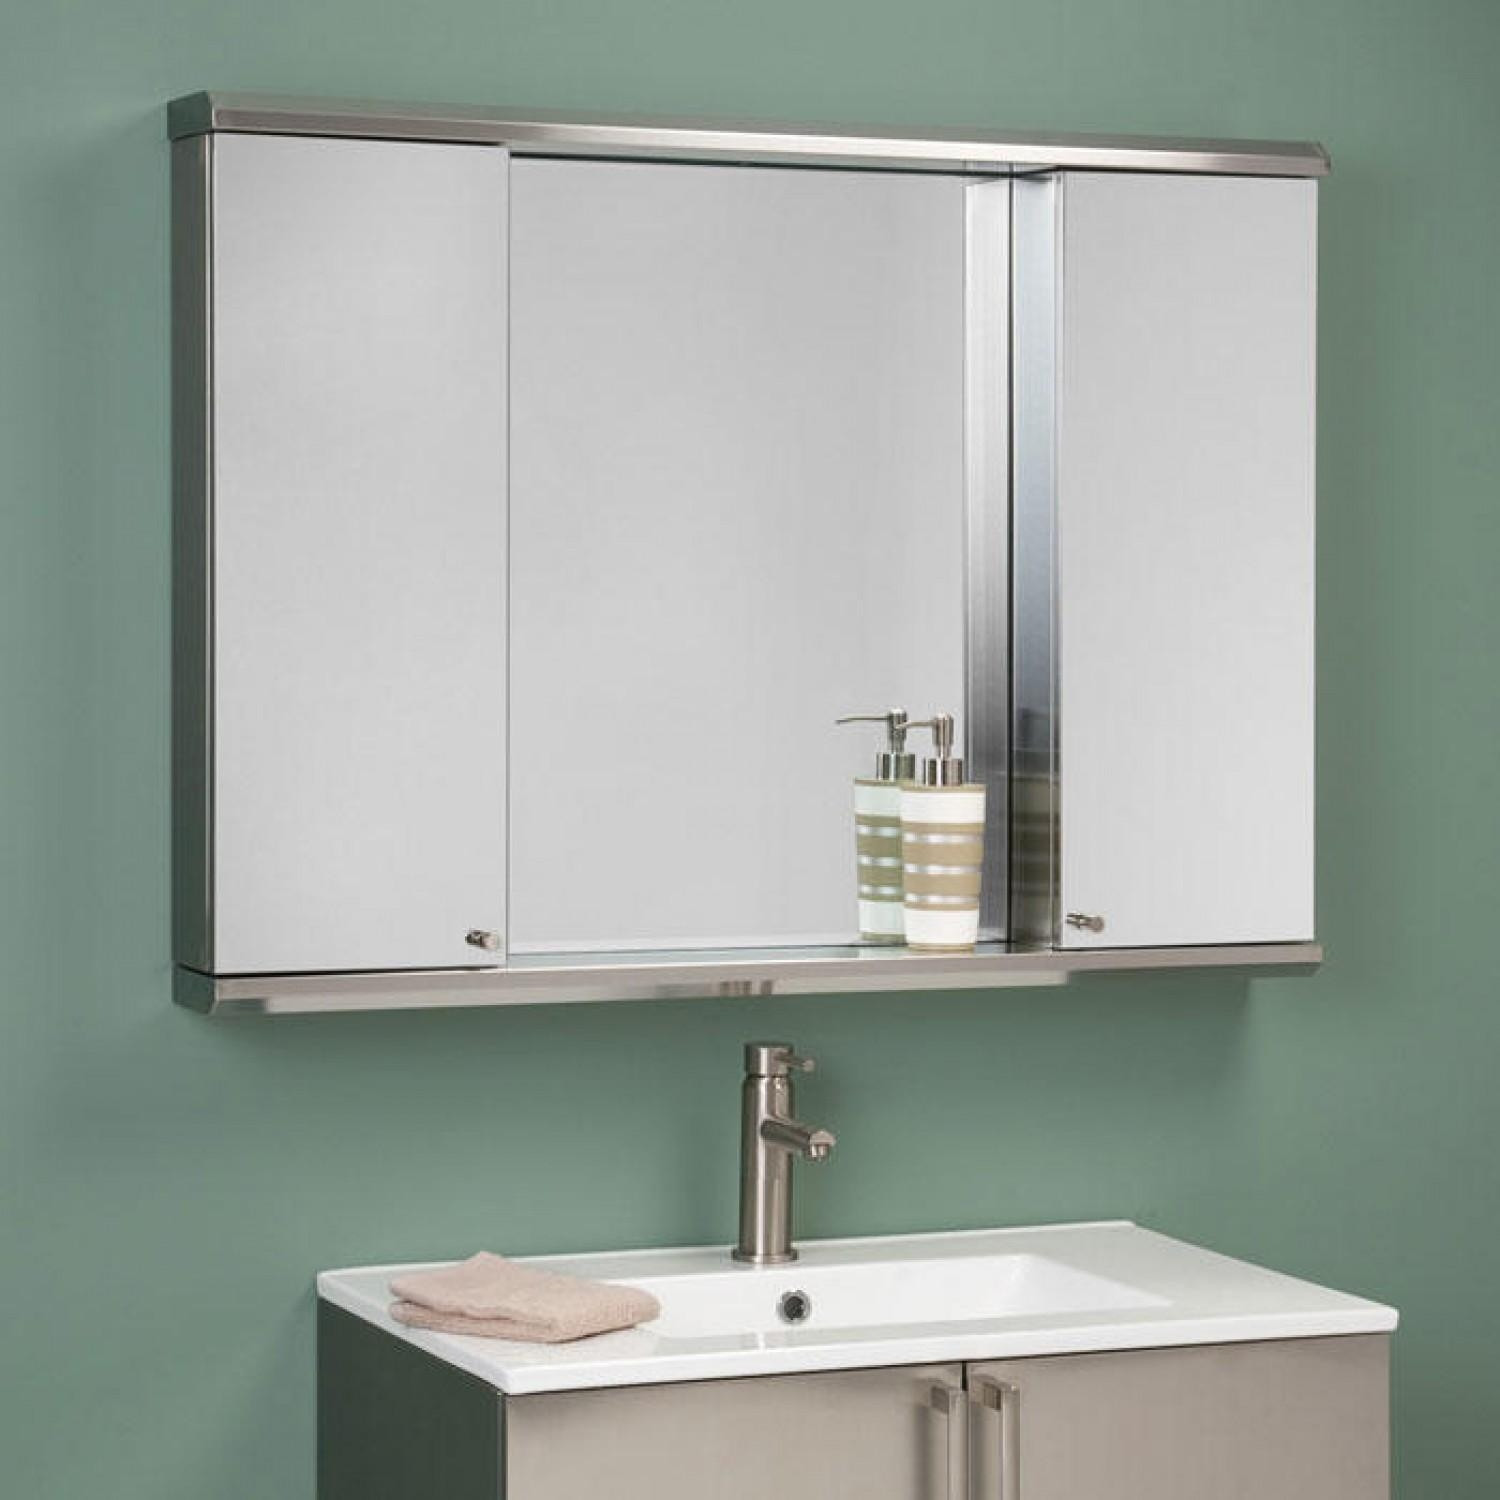 Home Depot Bathroom Mirror Cabinet
 20 Best Bathroom Medicine Cabinets With Mirrors